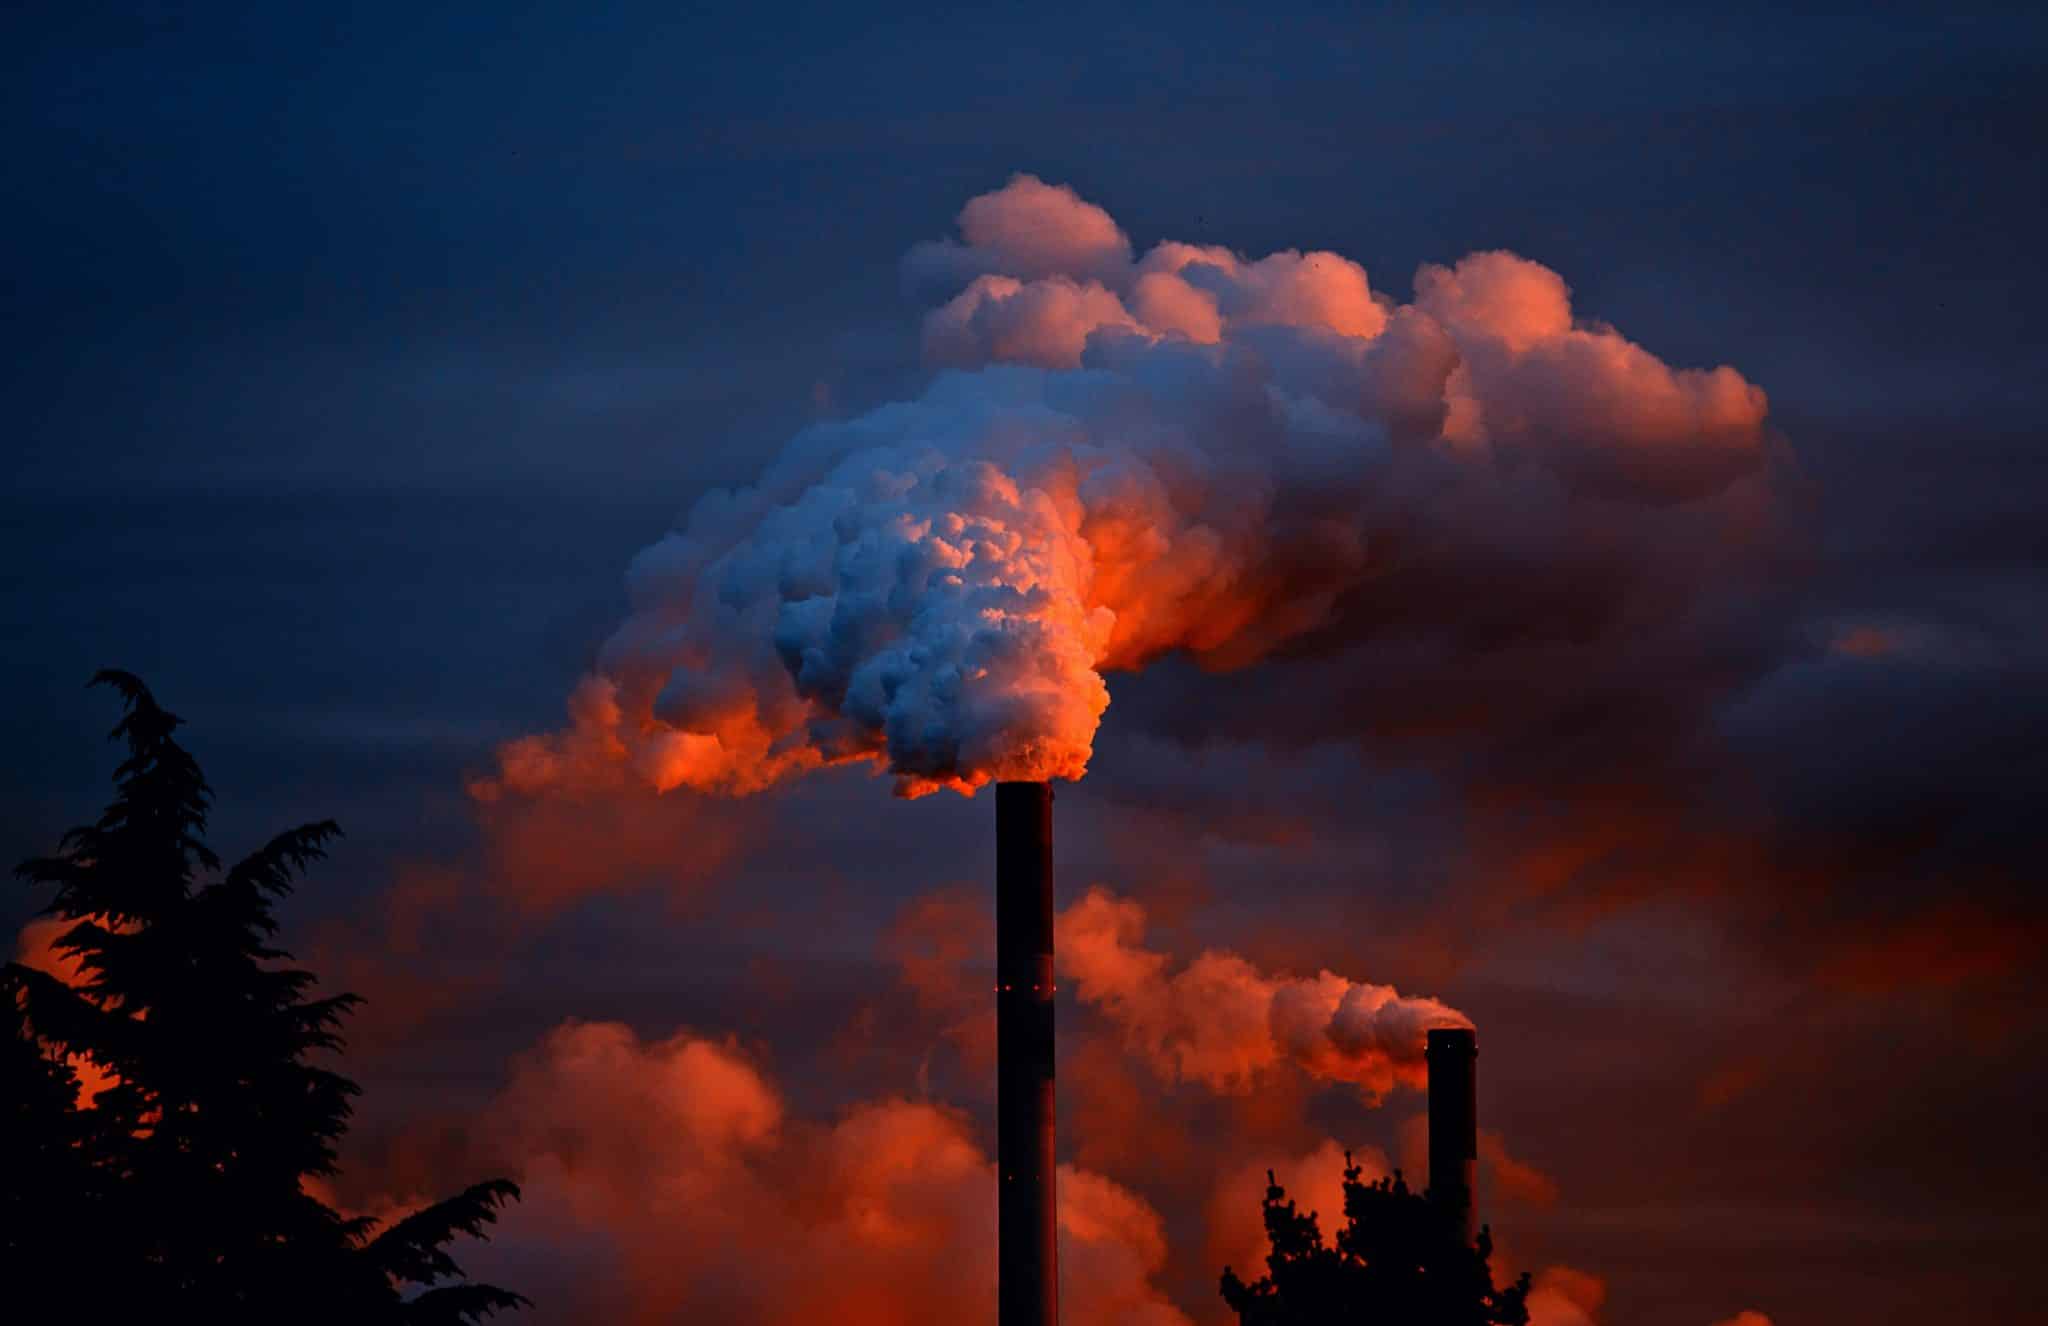 Fotografia de chaminés industriais emitindo gases poluentes